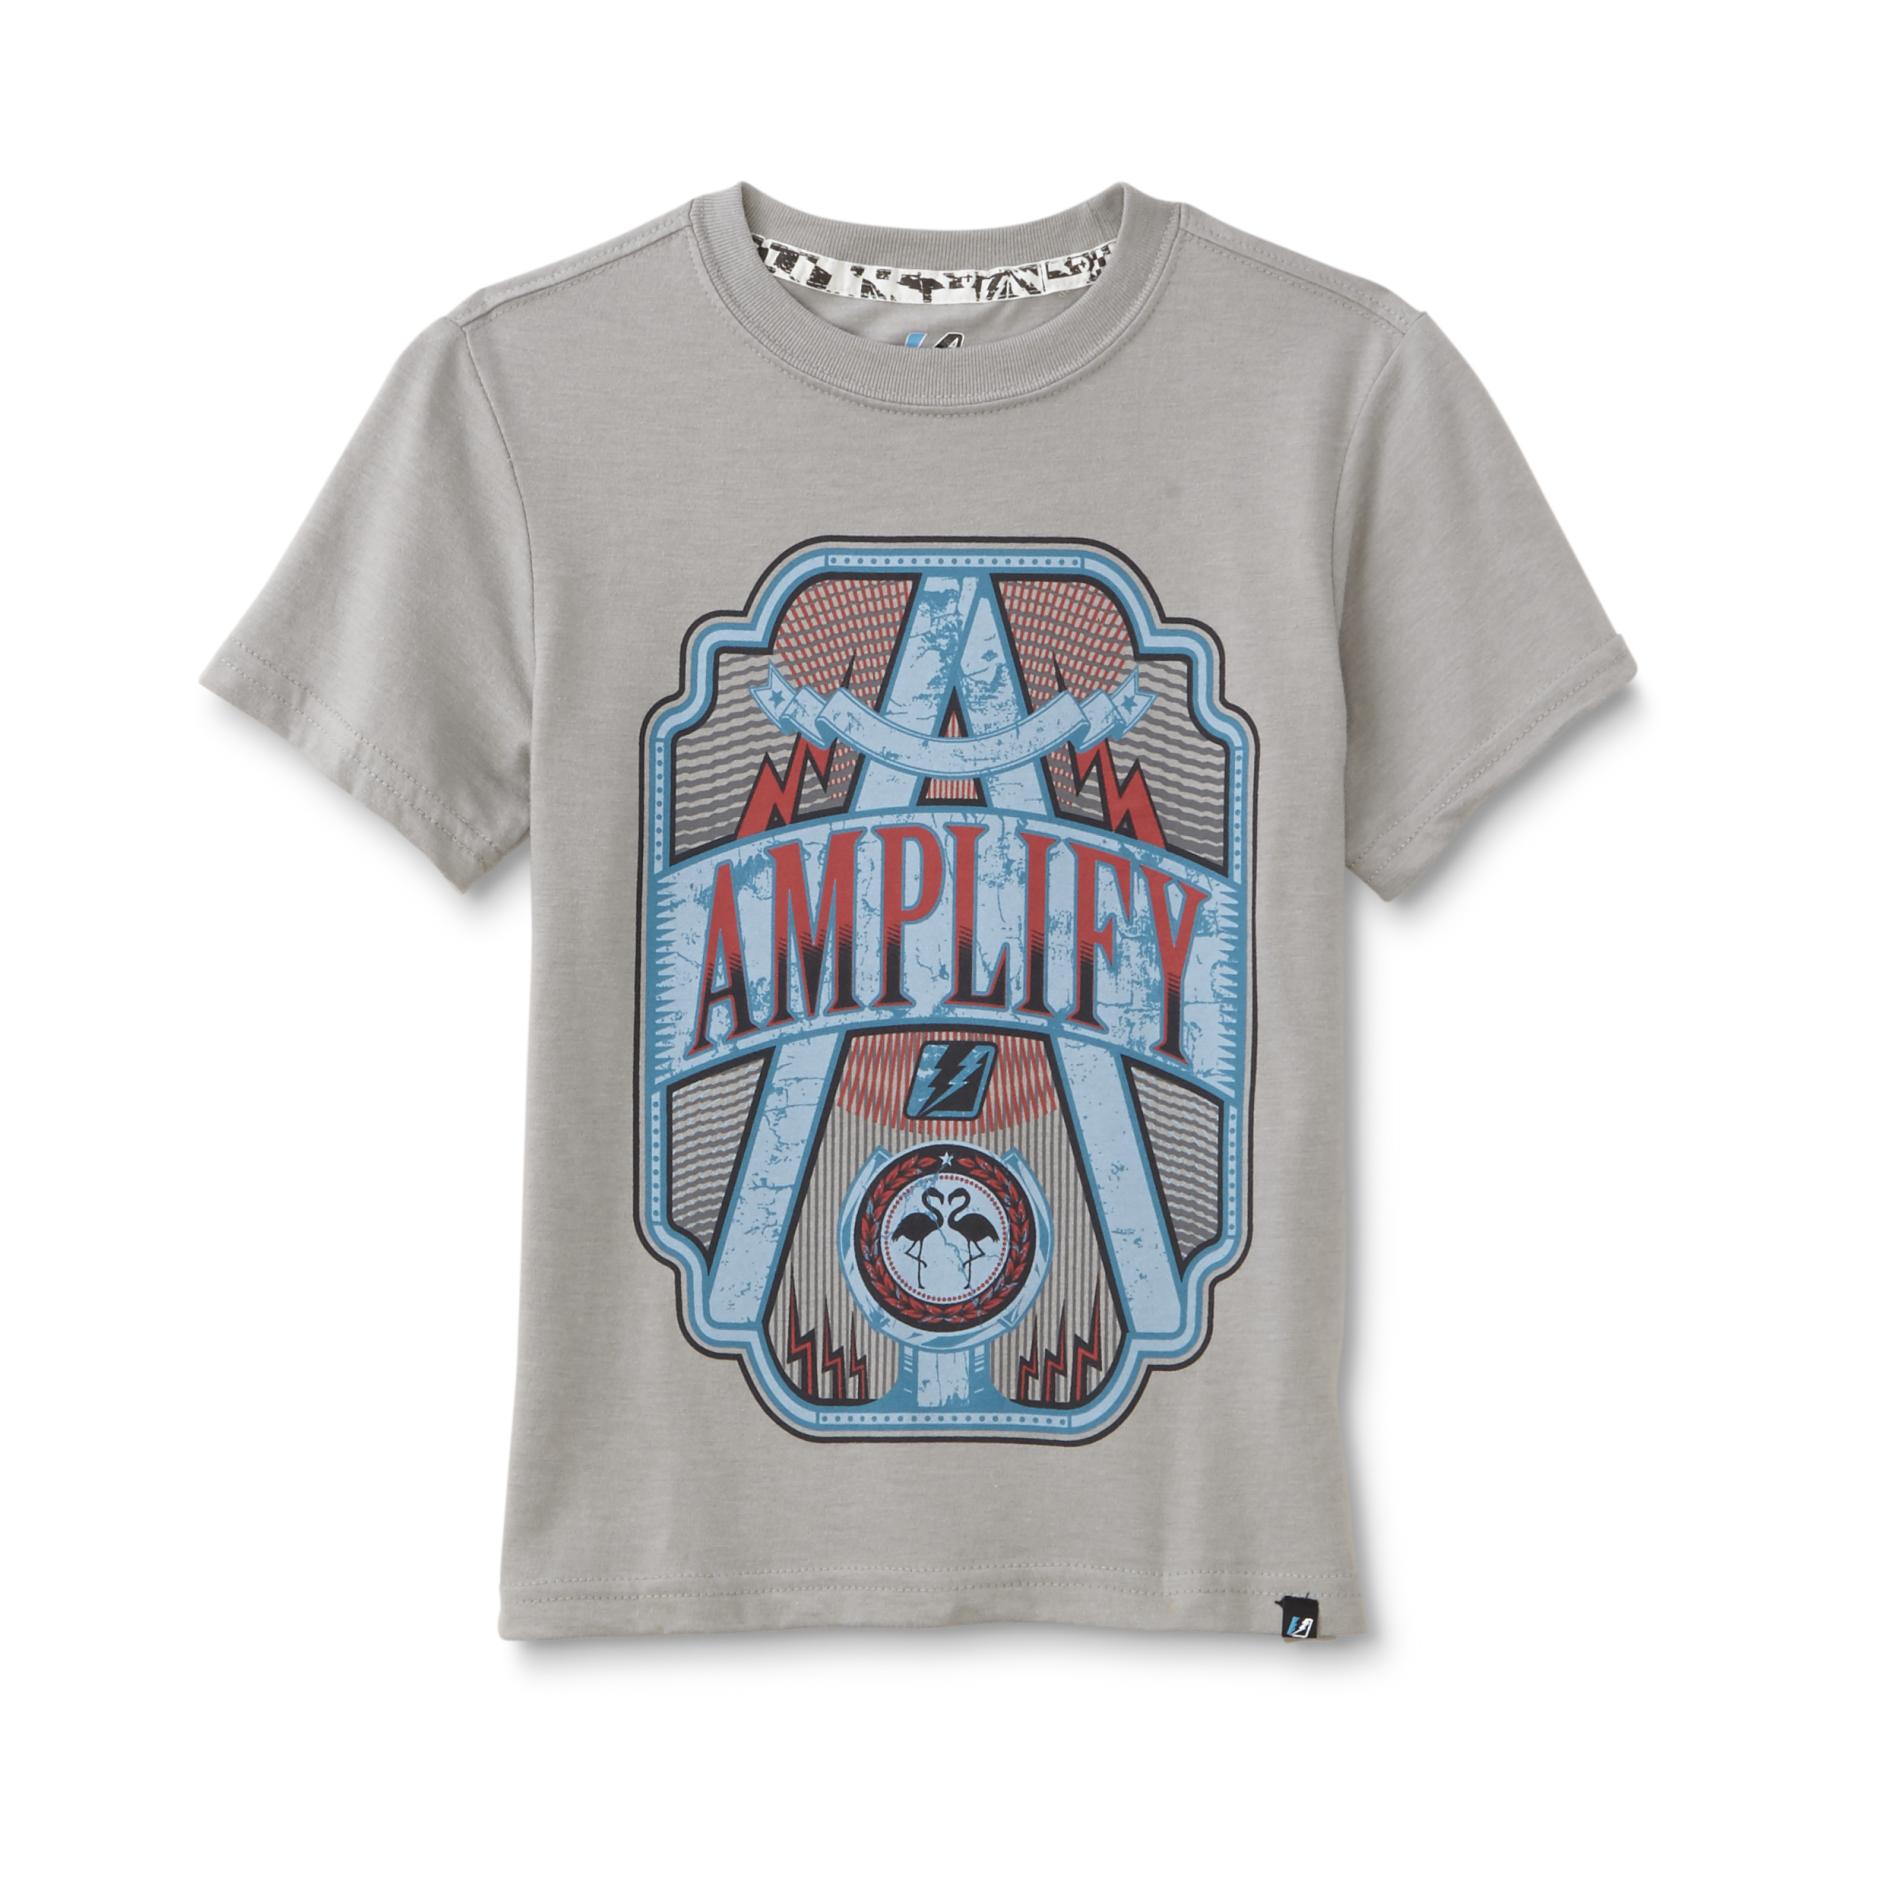 Amplify Boy's Graphic T-Shirt - Lightning